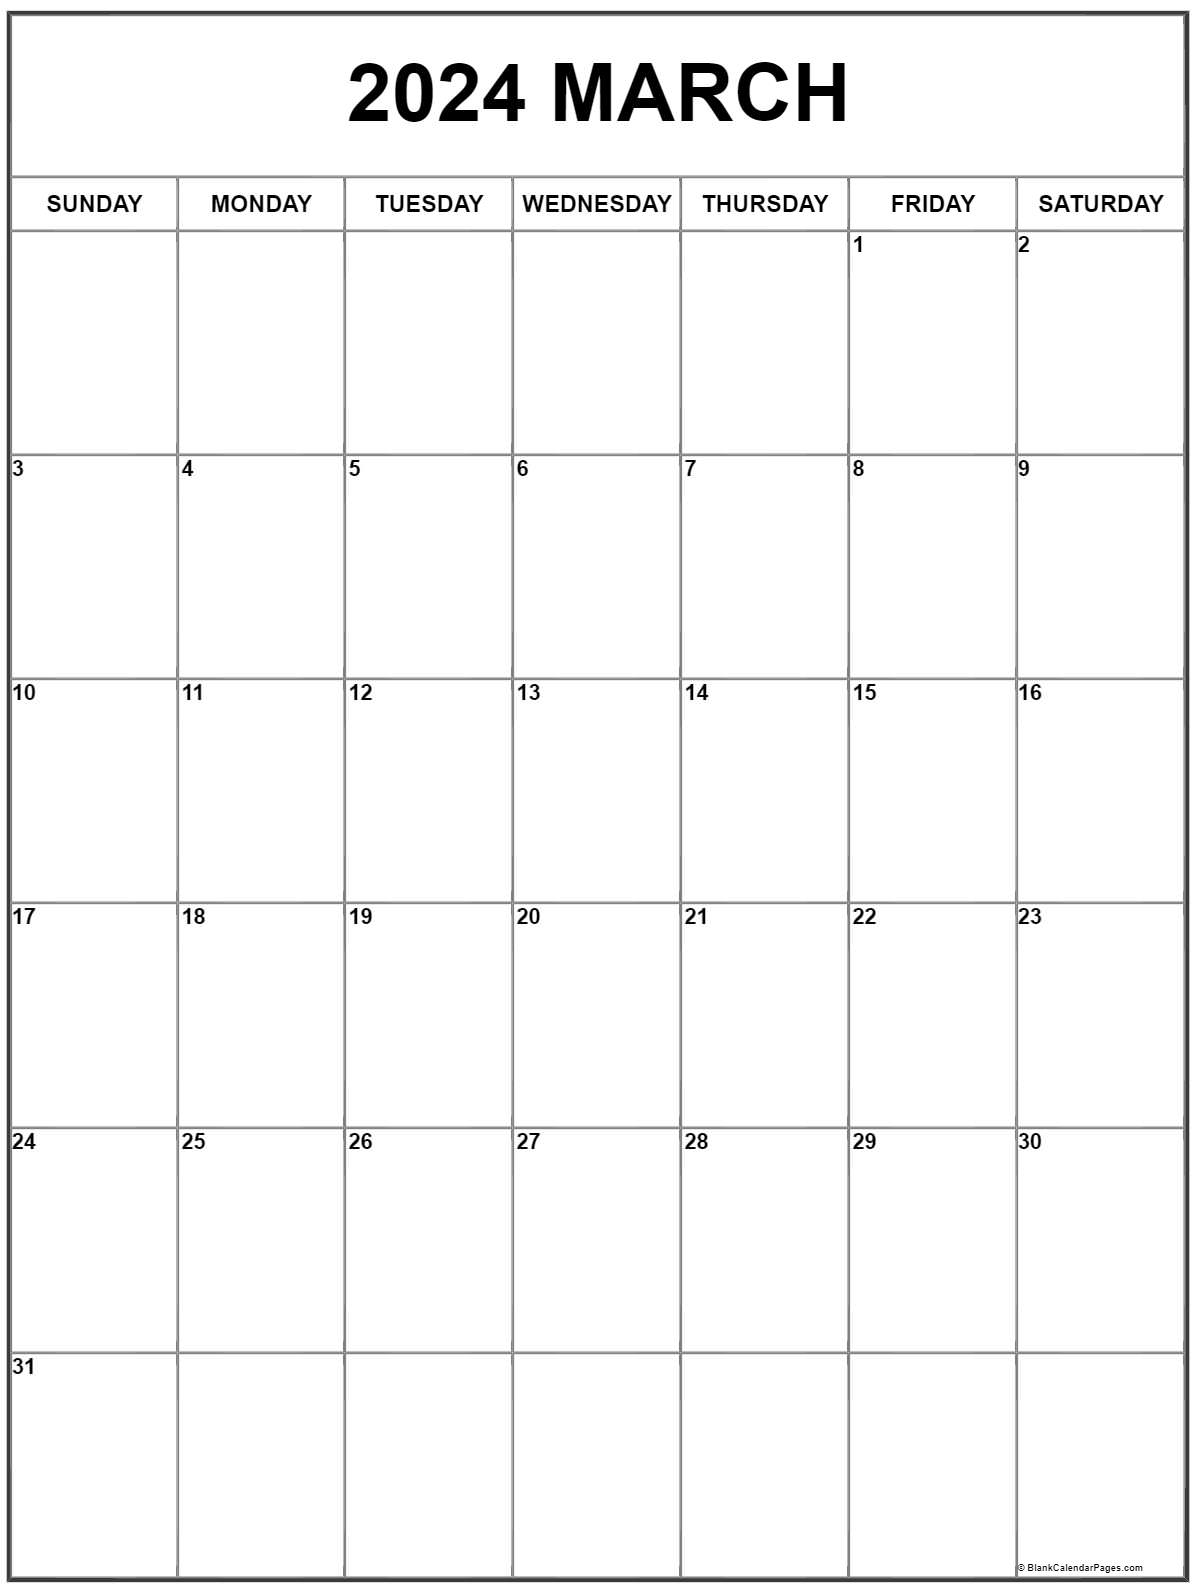 March 2023 Calendar Vertical Get Calender 2023 Update